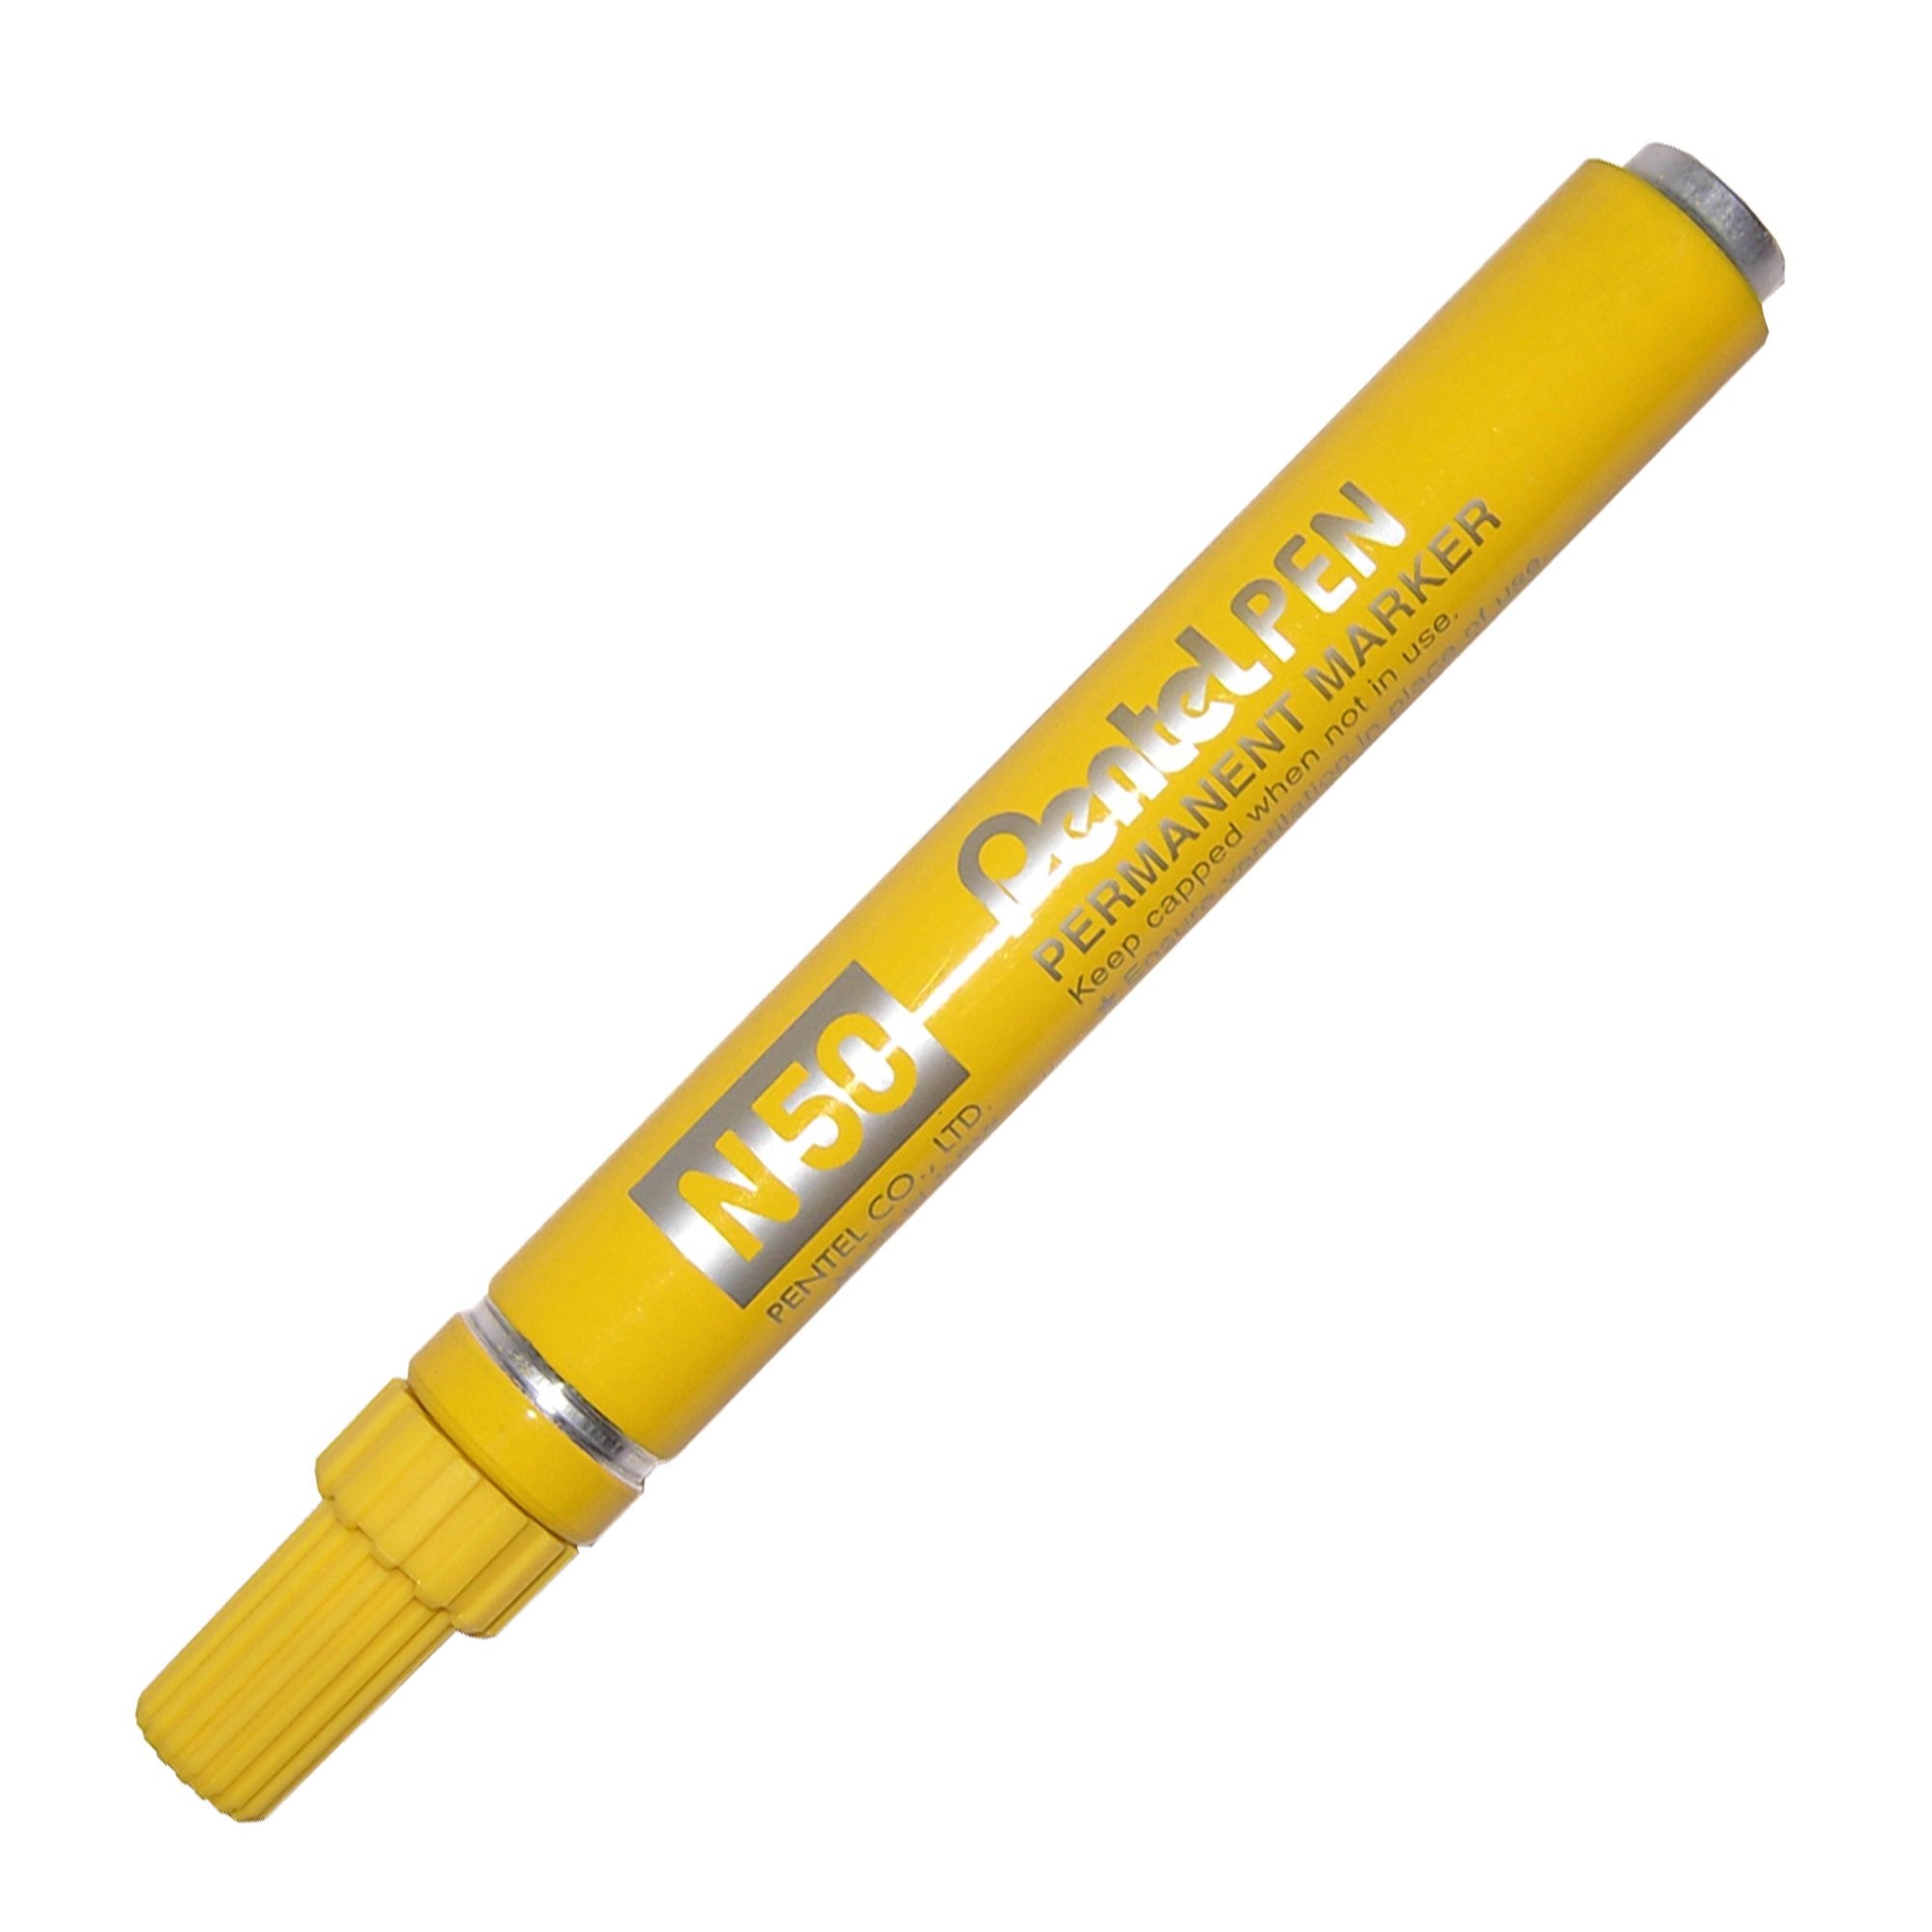 pentel-marcatore-pen-n50-giallo-p-tonda